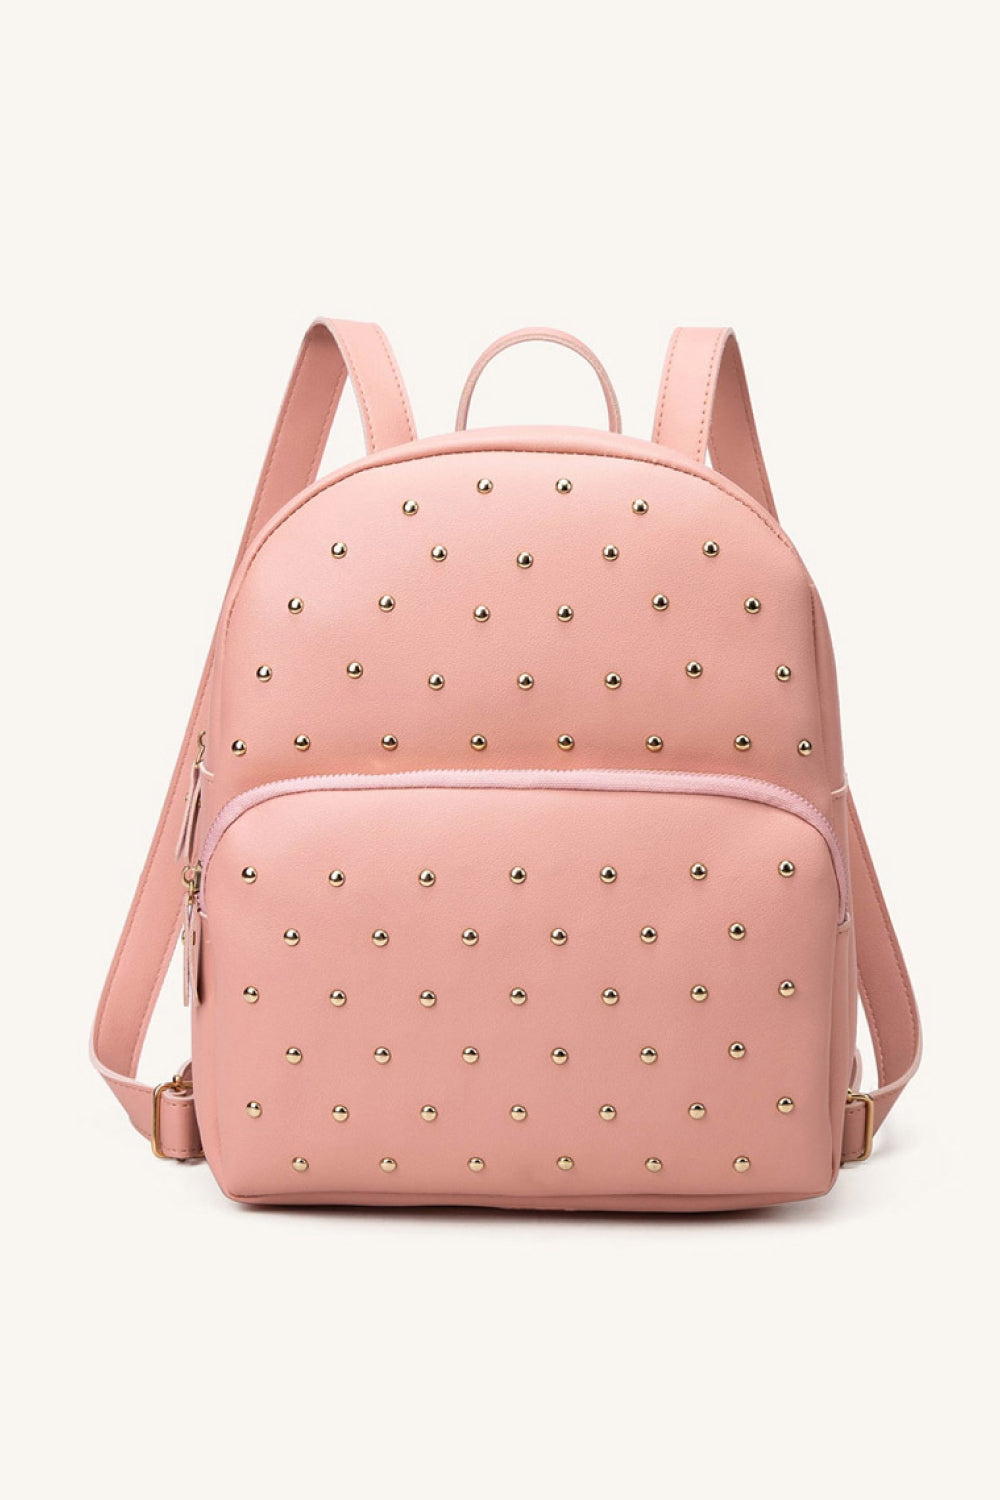 Black or Peach - Studded PU Leather Backpack - One Size Ti Amo I love you